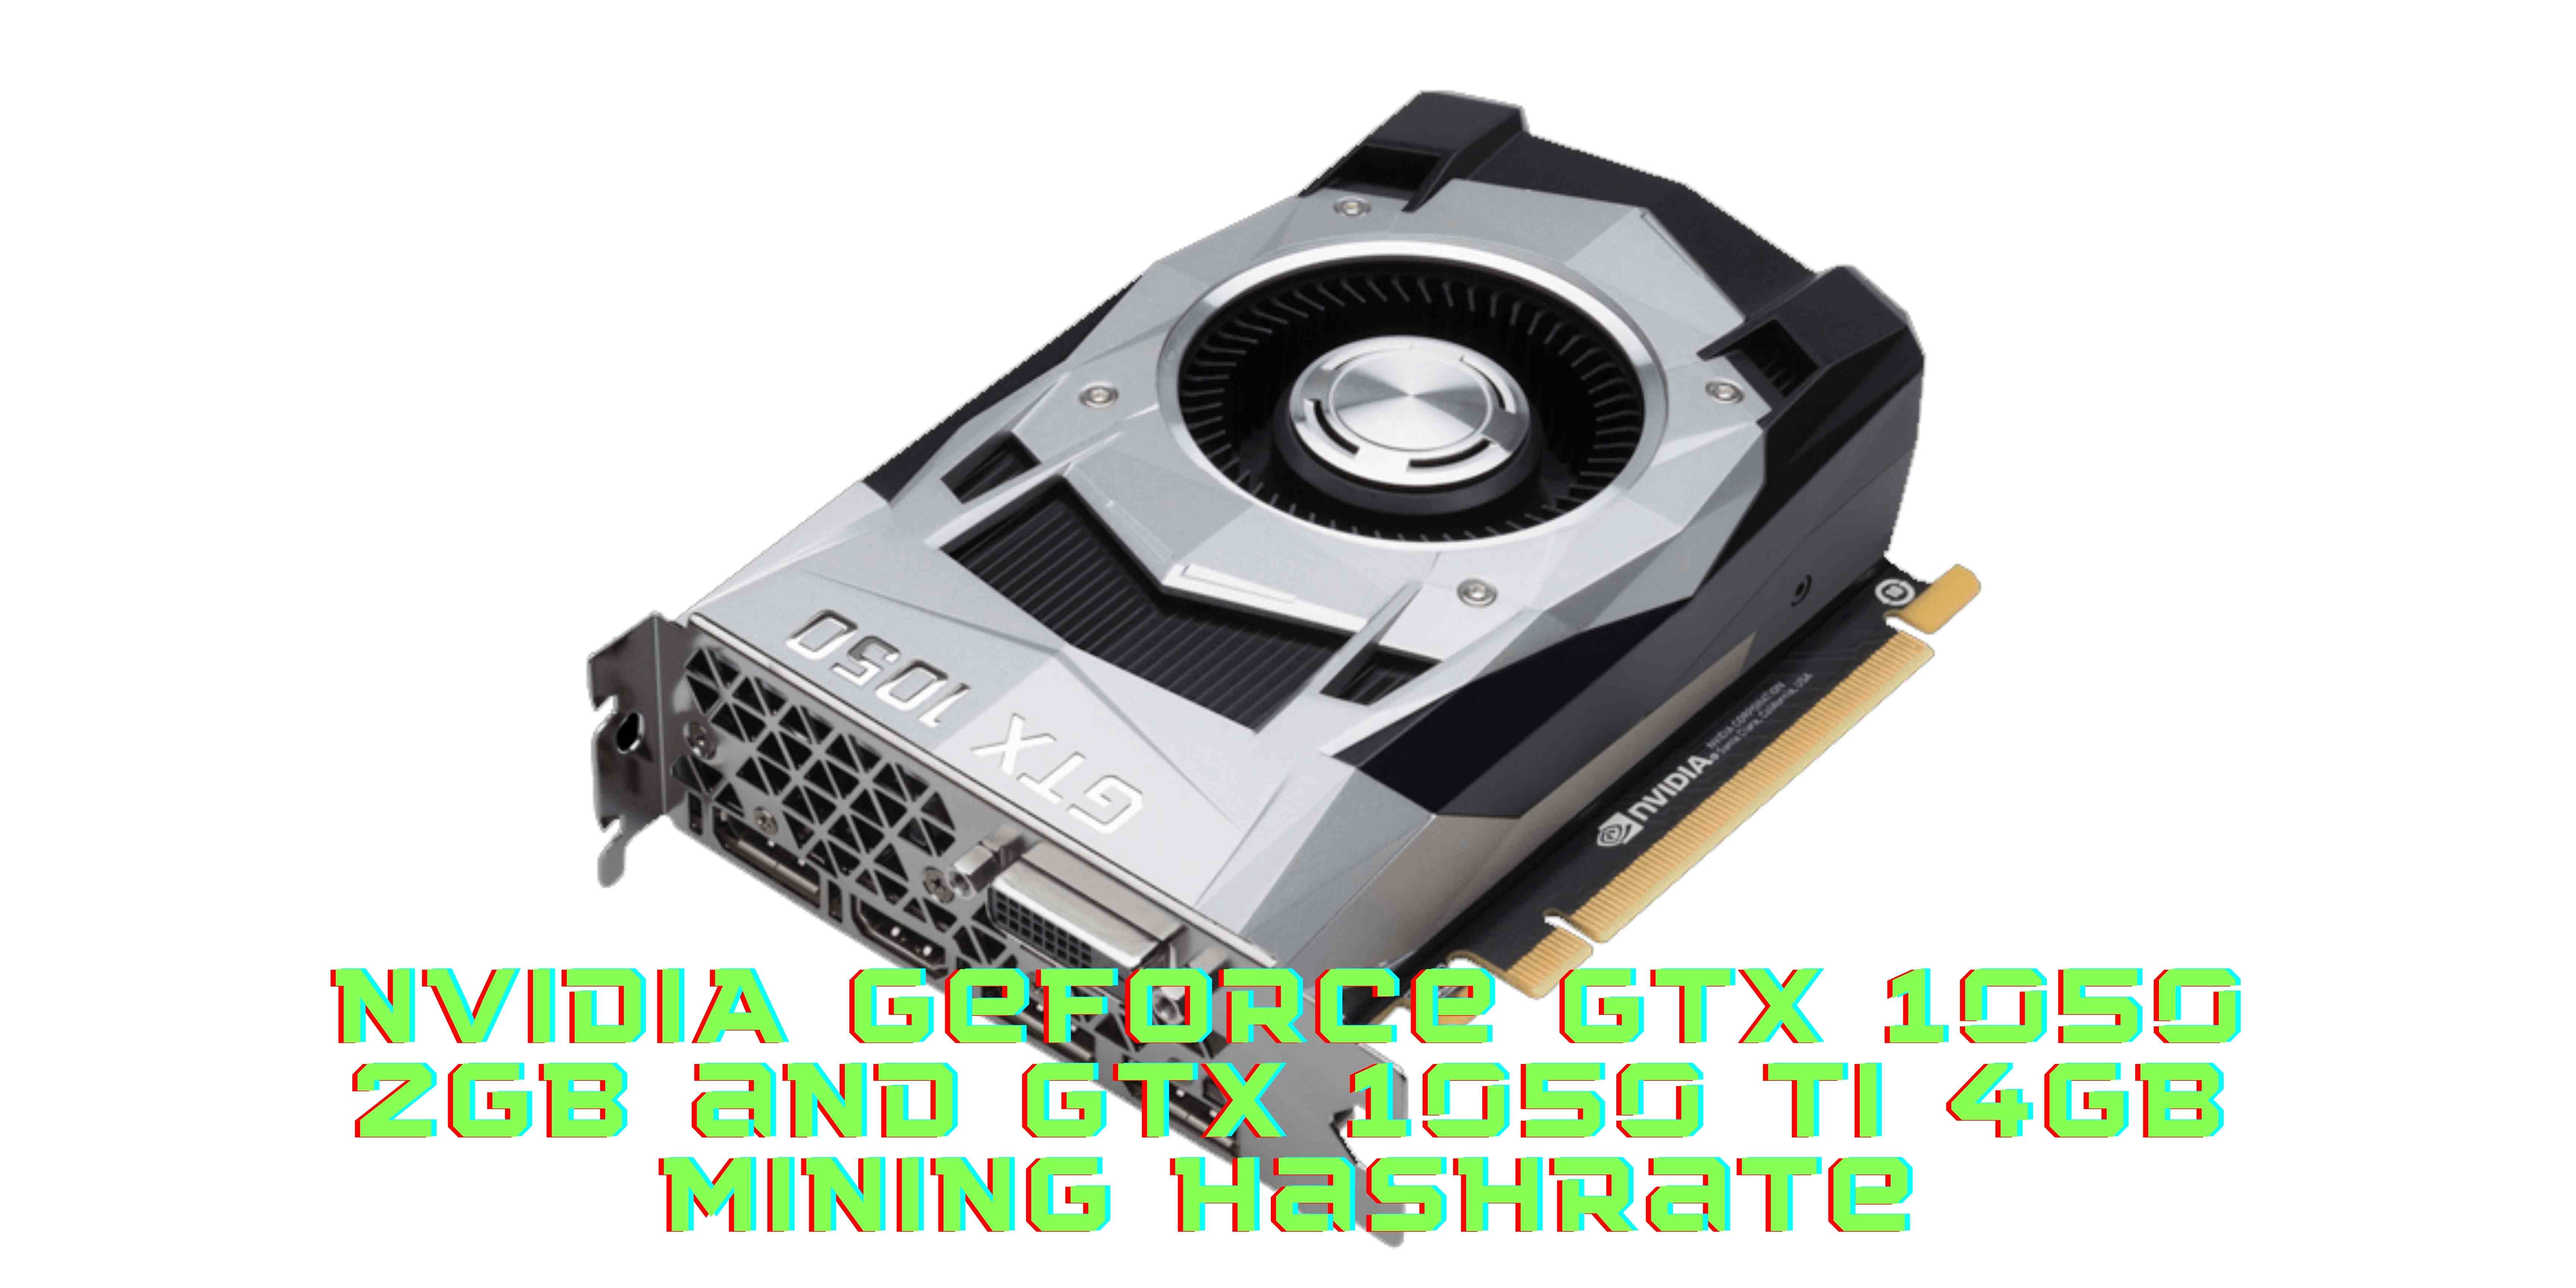 NVIDIA GeForce 2GB GTX 1050 and 4GB GTX 1050 TI Hashrate Of Mining Compared!